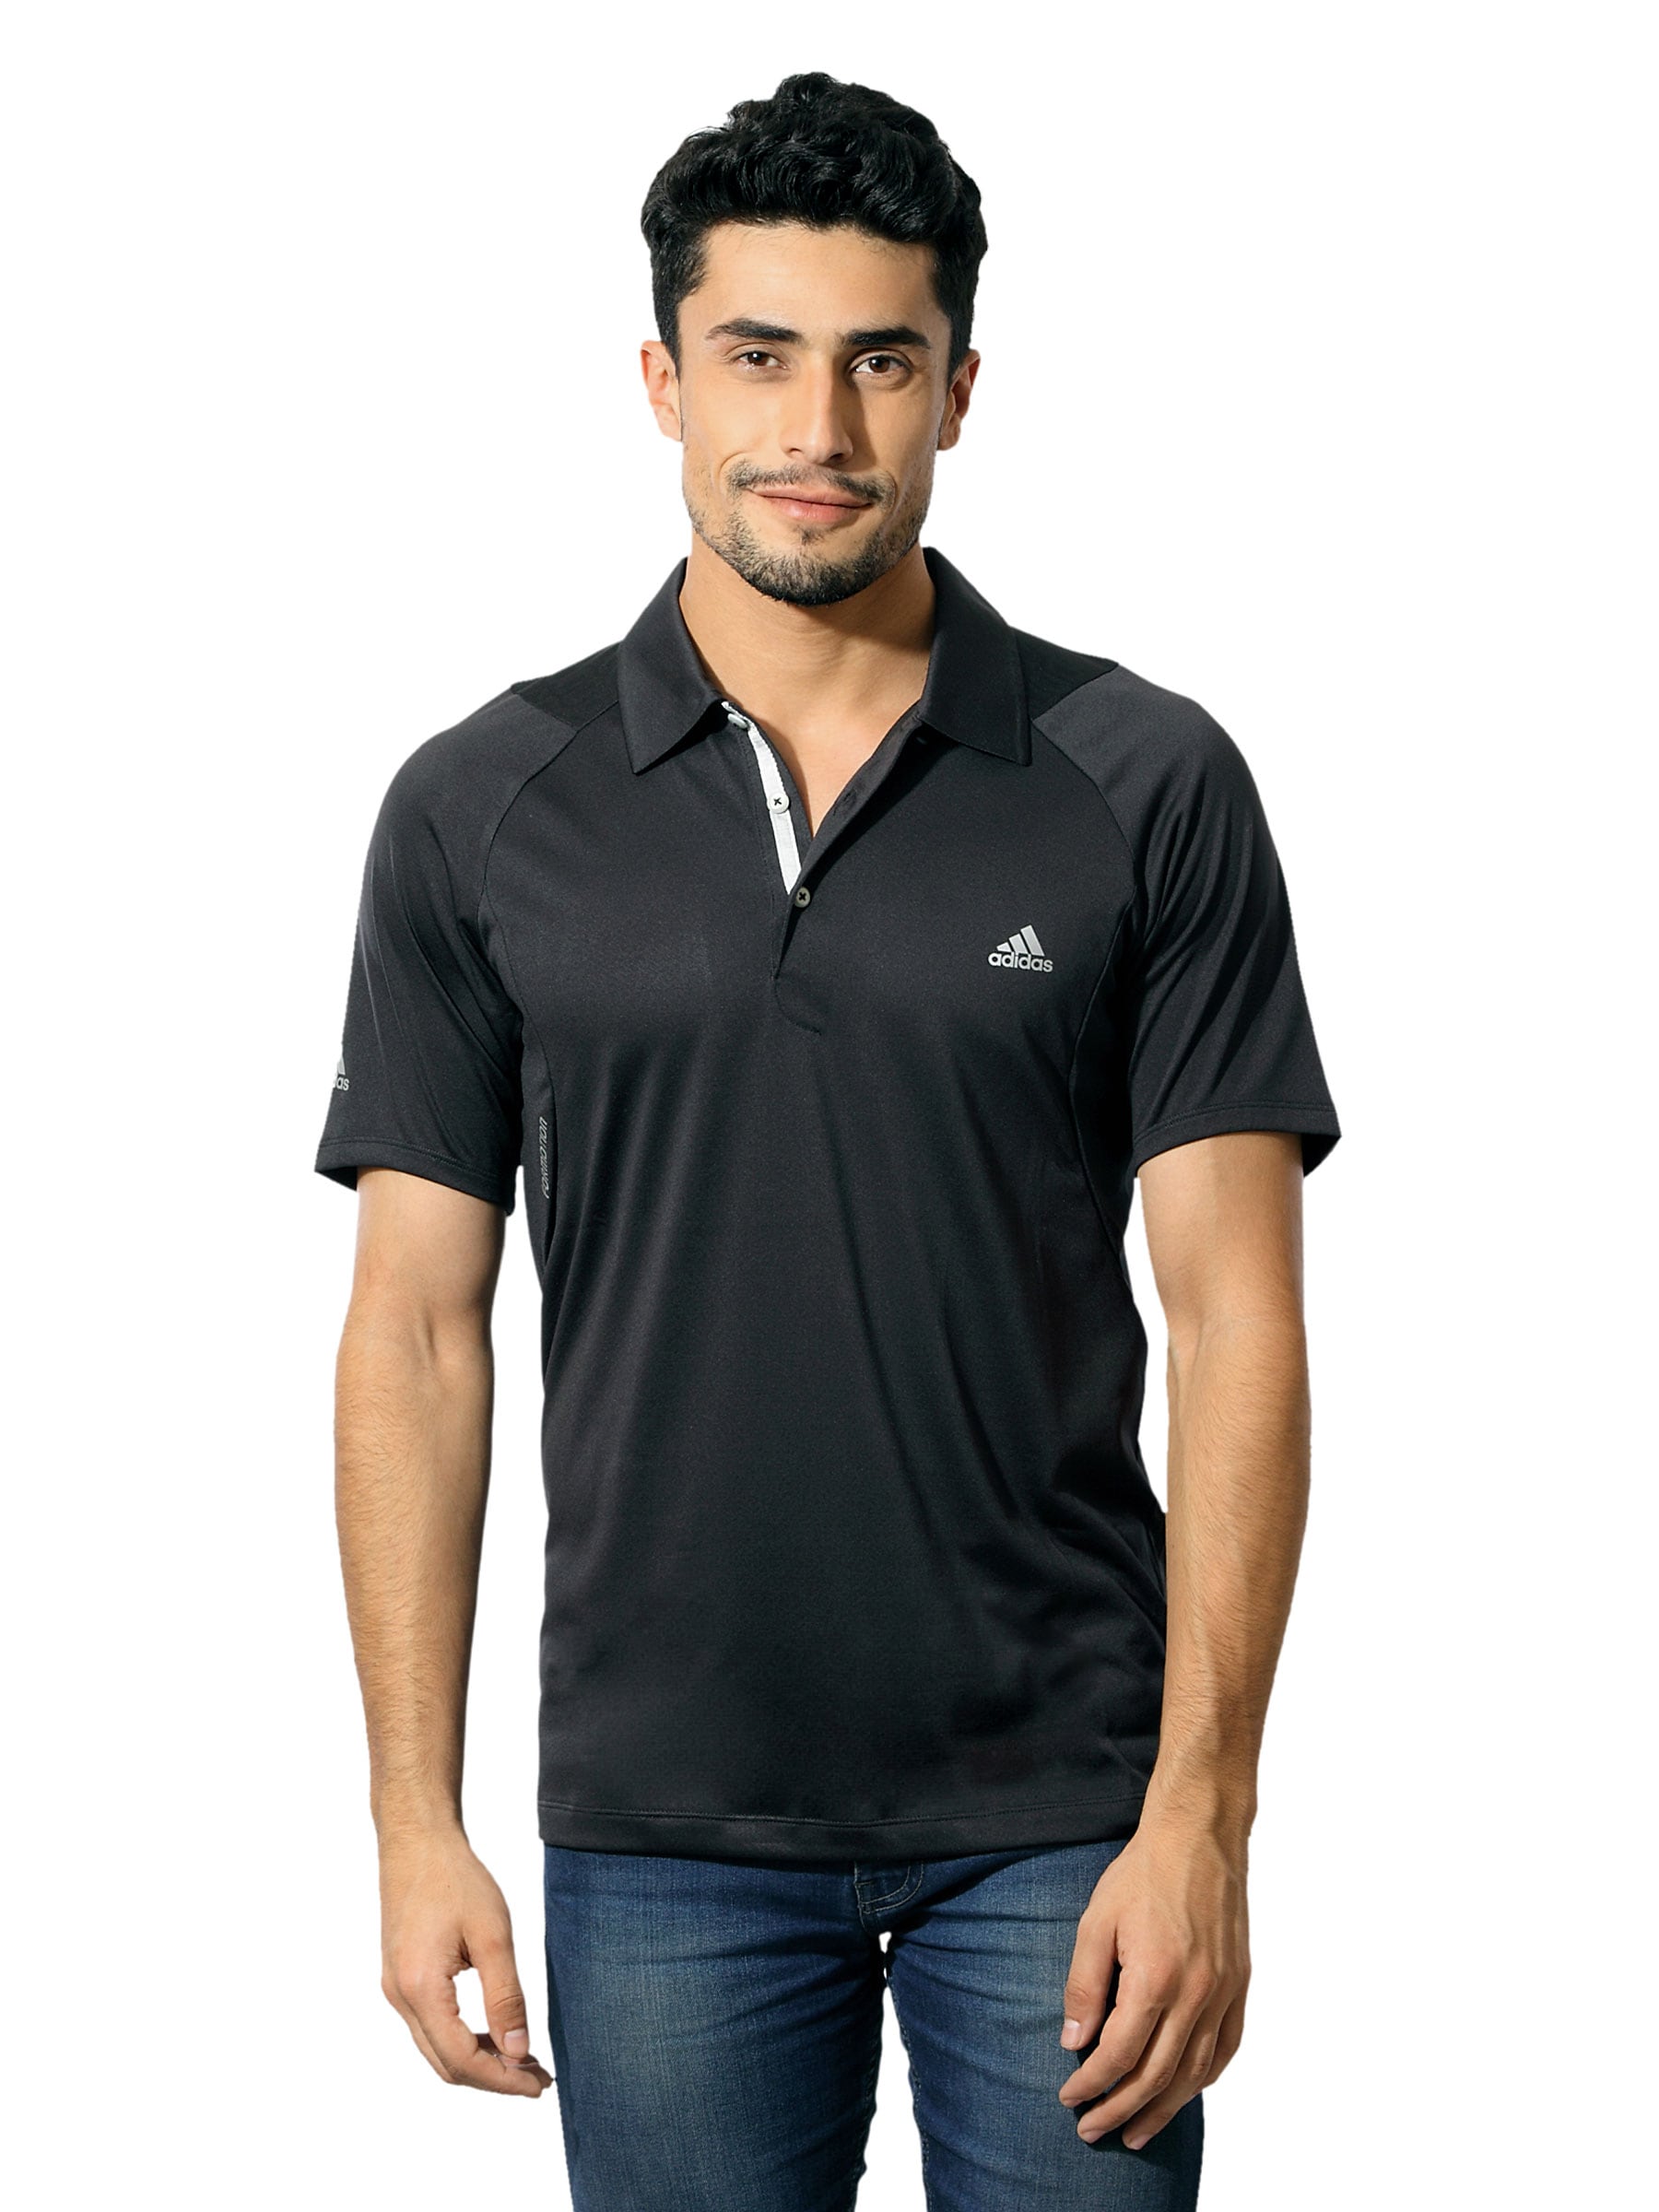 ADIDAS Men Vesta Black Polo T-Shirt